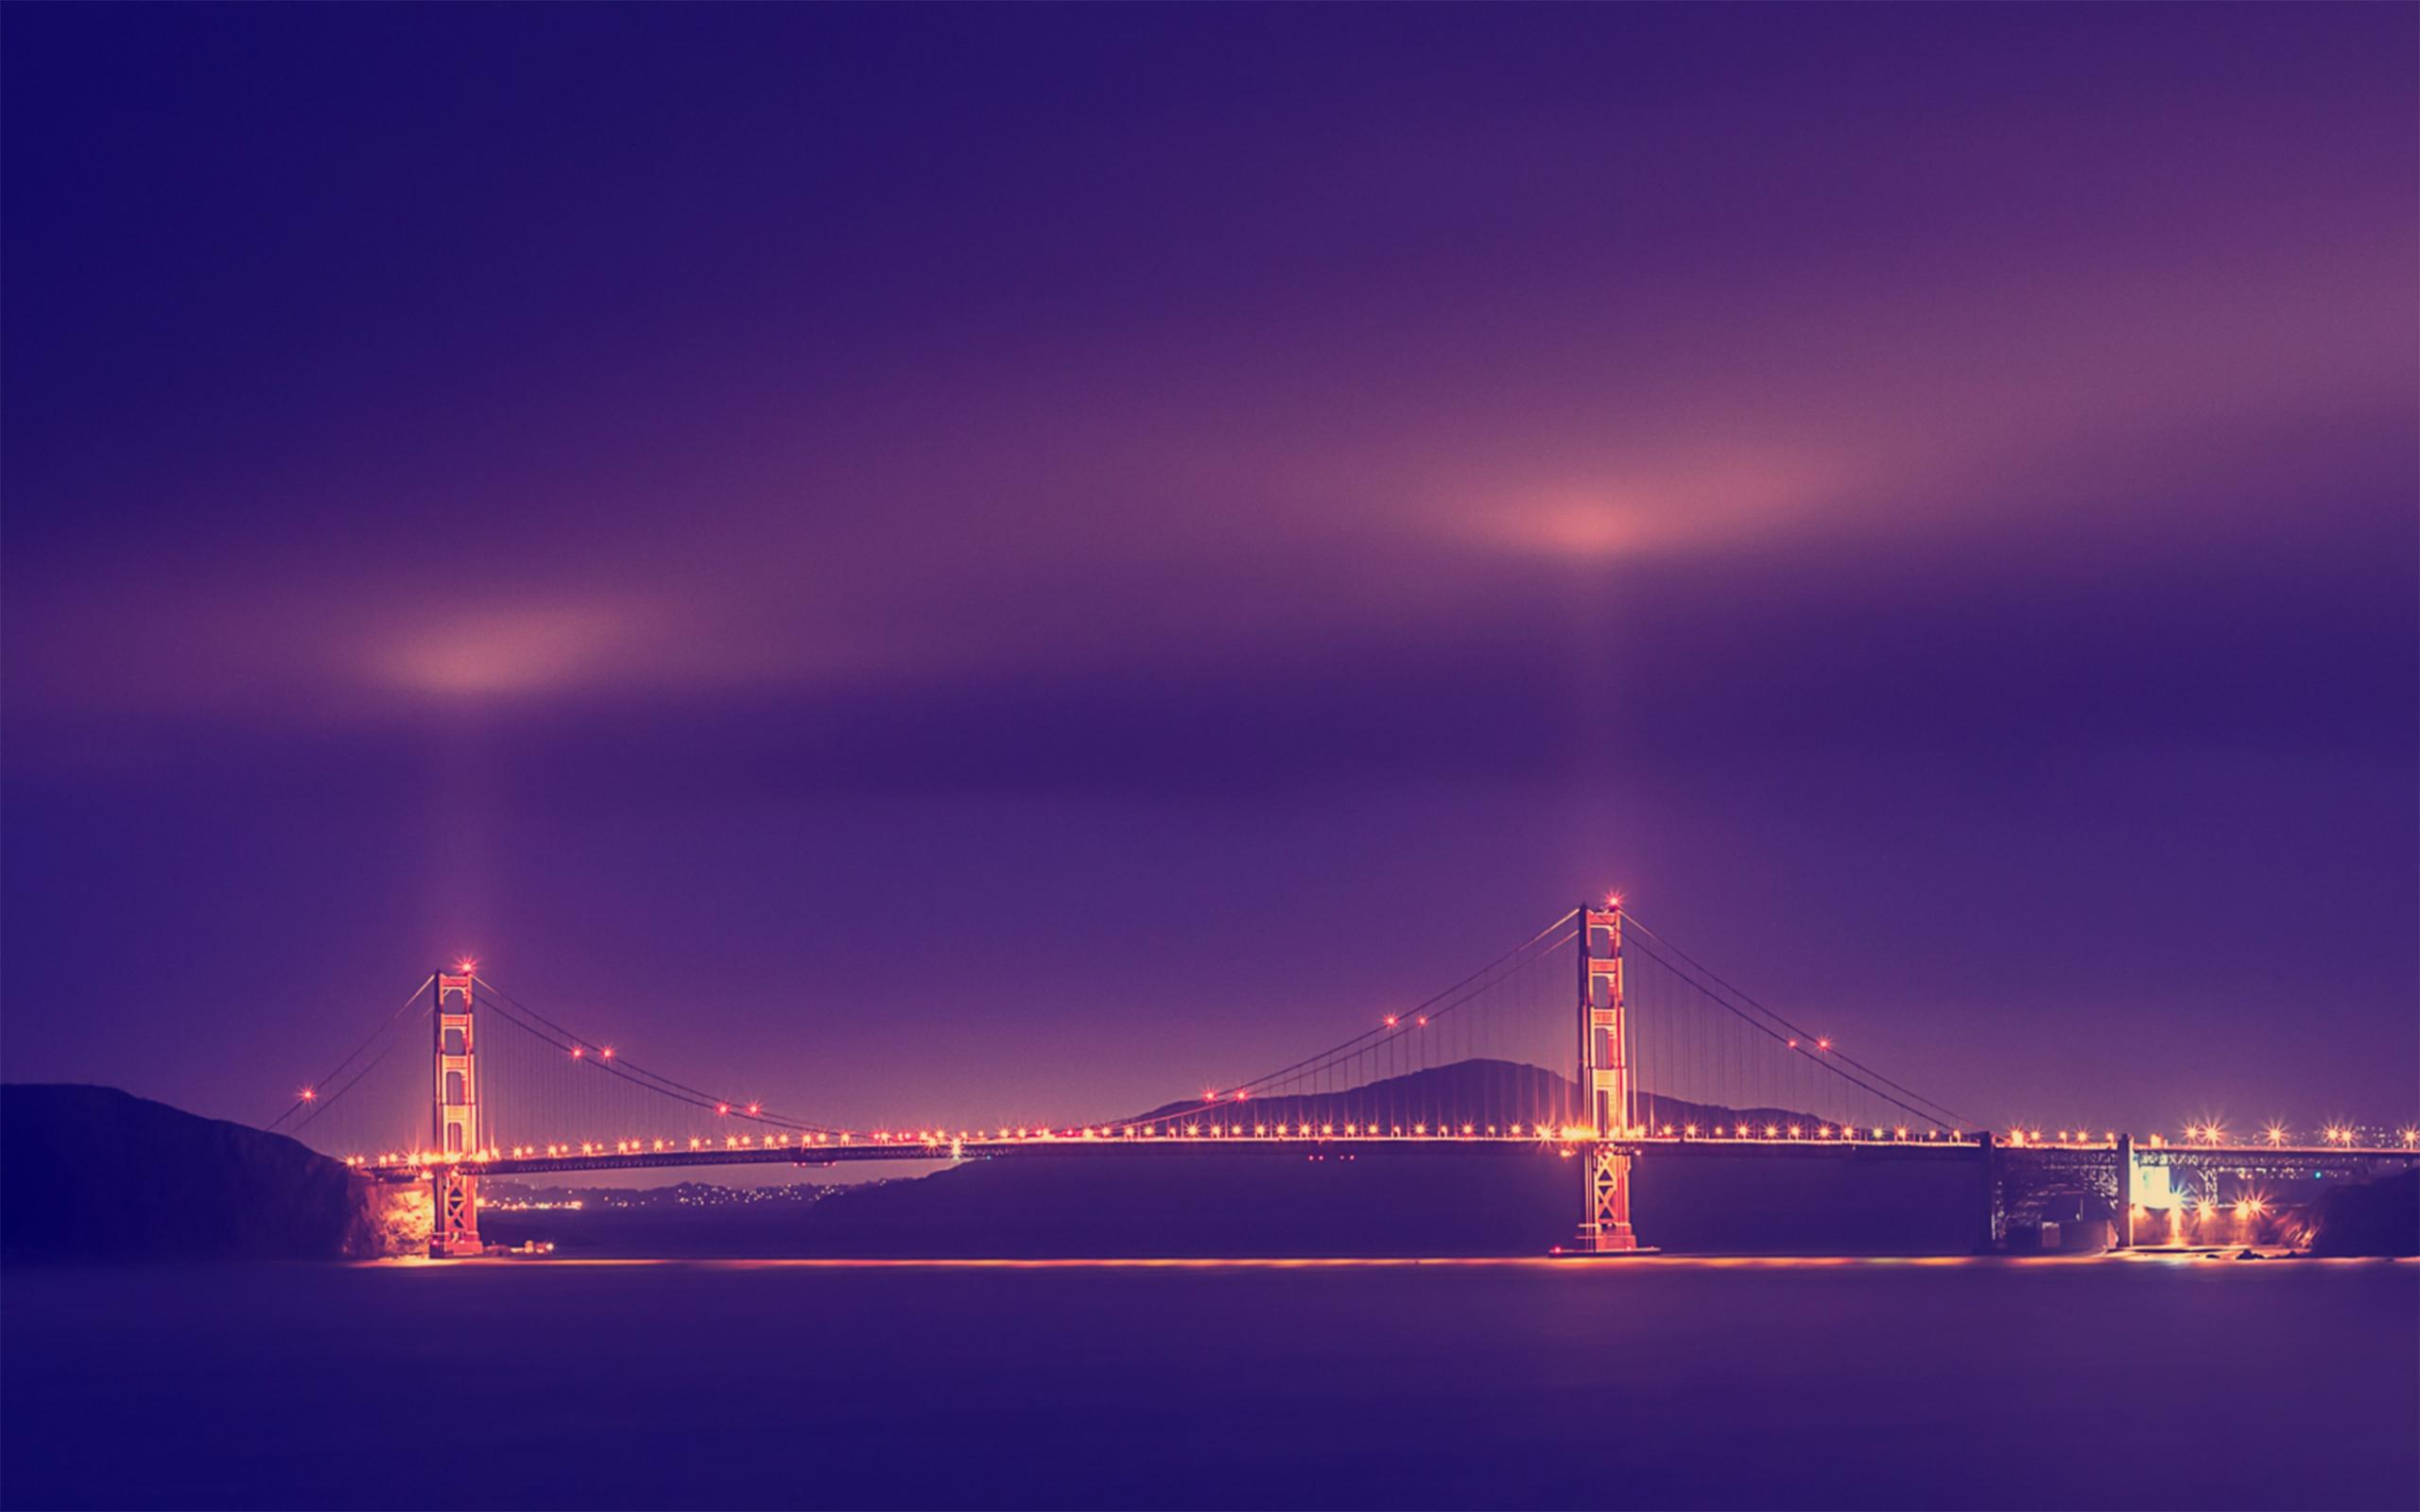 San Francisco Golden Gate Bridge Wallpaper in jpg format for free